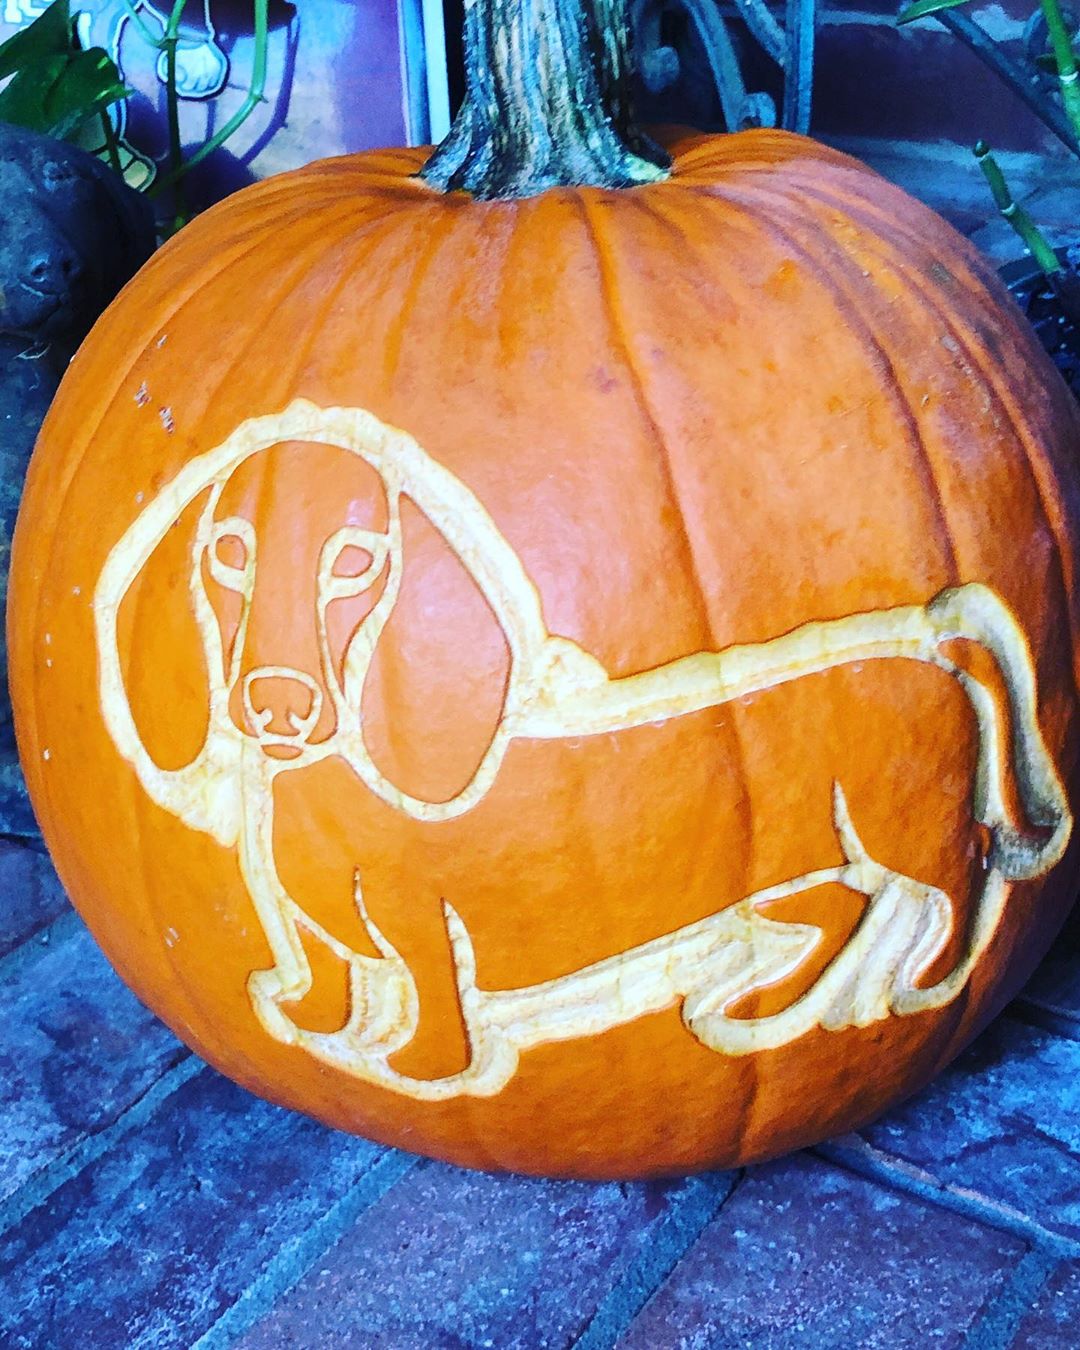 Dacshund Dog Carved Pumpkin | 25+ Creative Carved Pumpkins